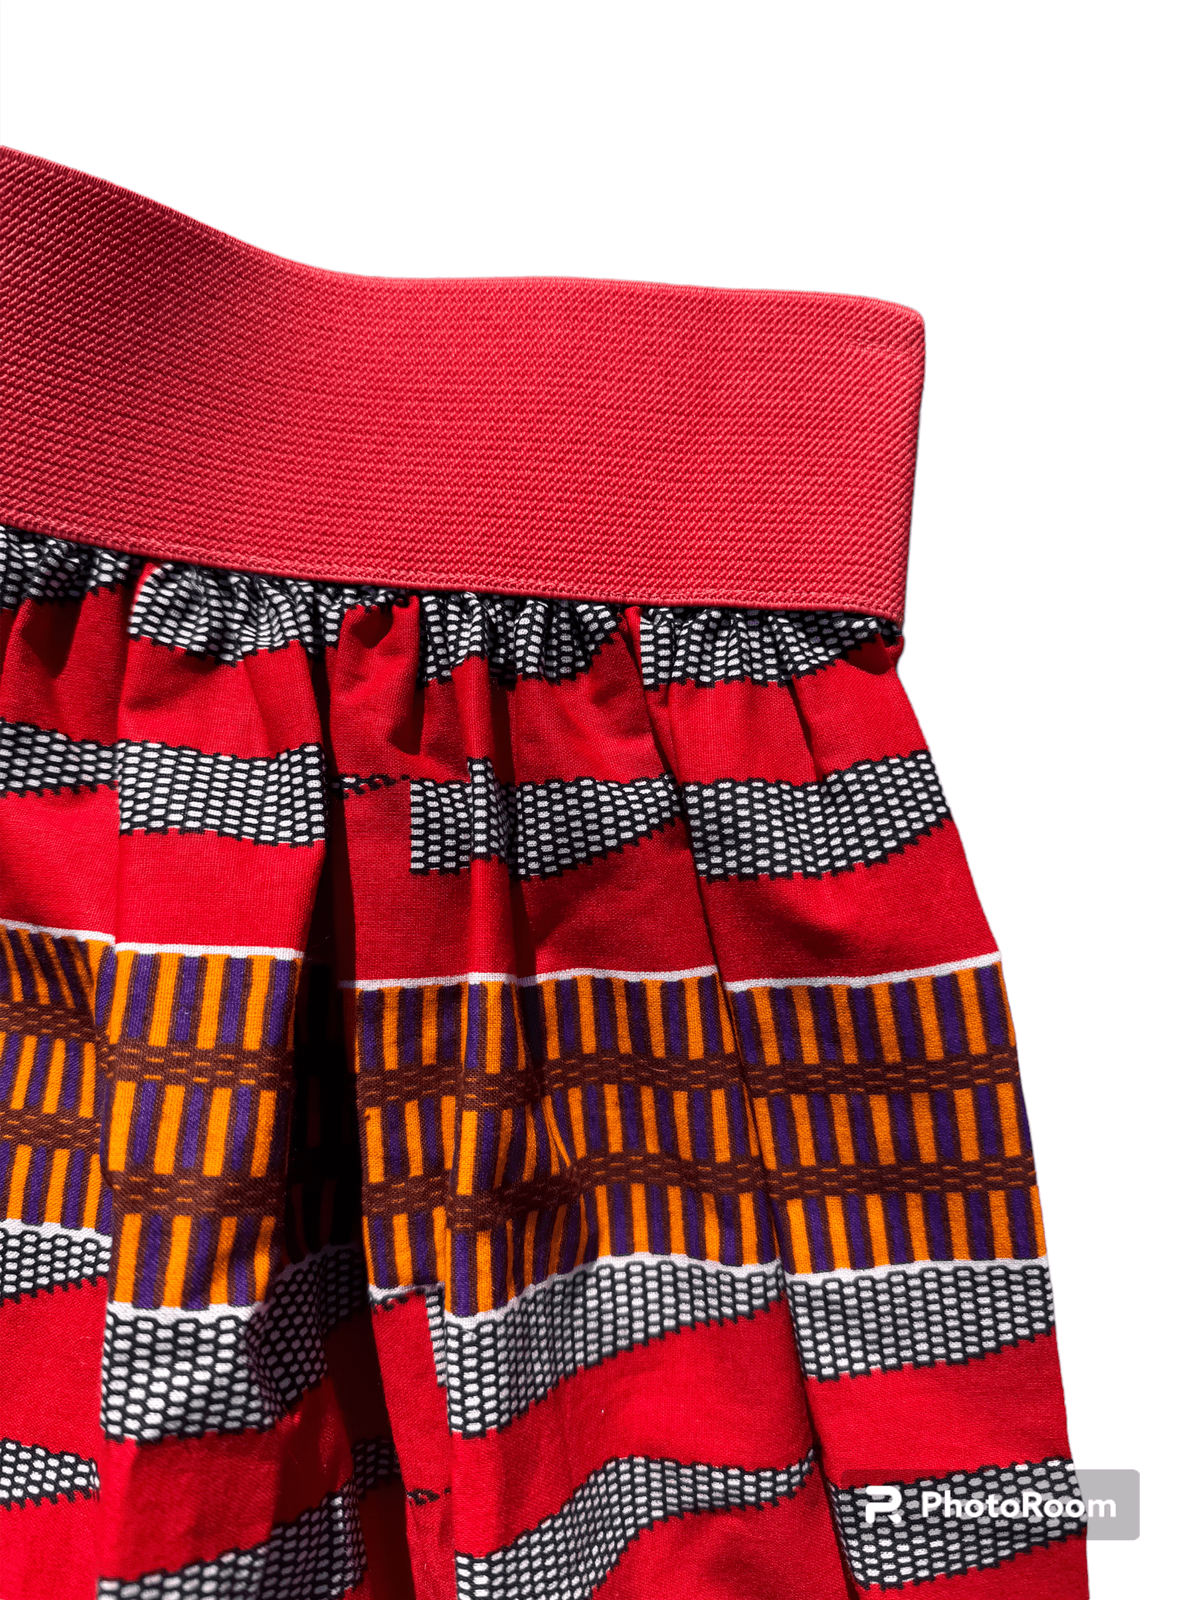 Stripes Red Elastic mini skirt coral elastic waist band close up